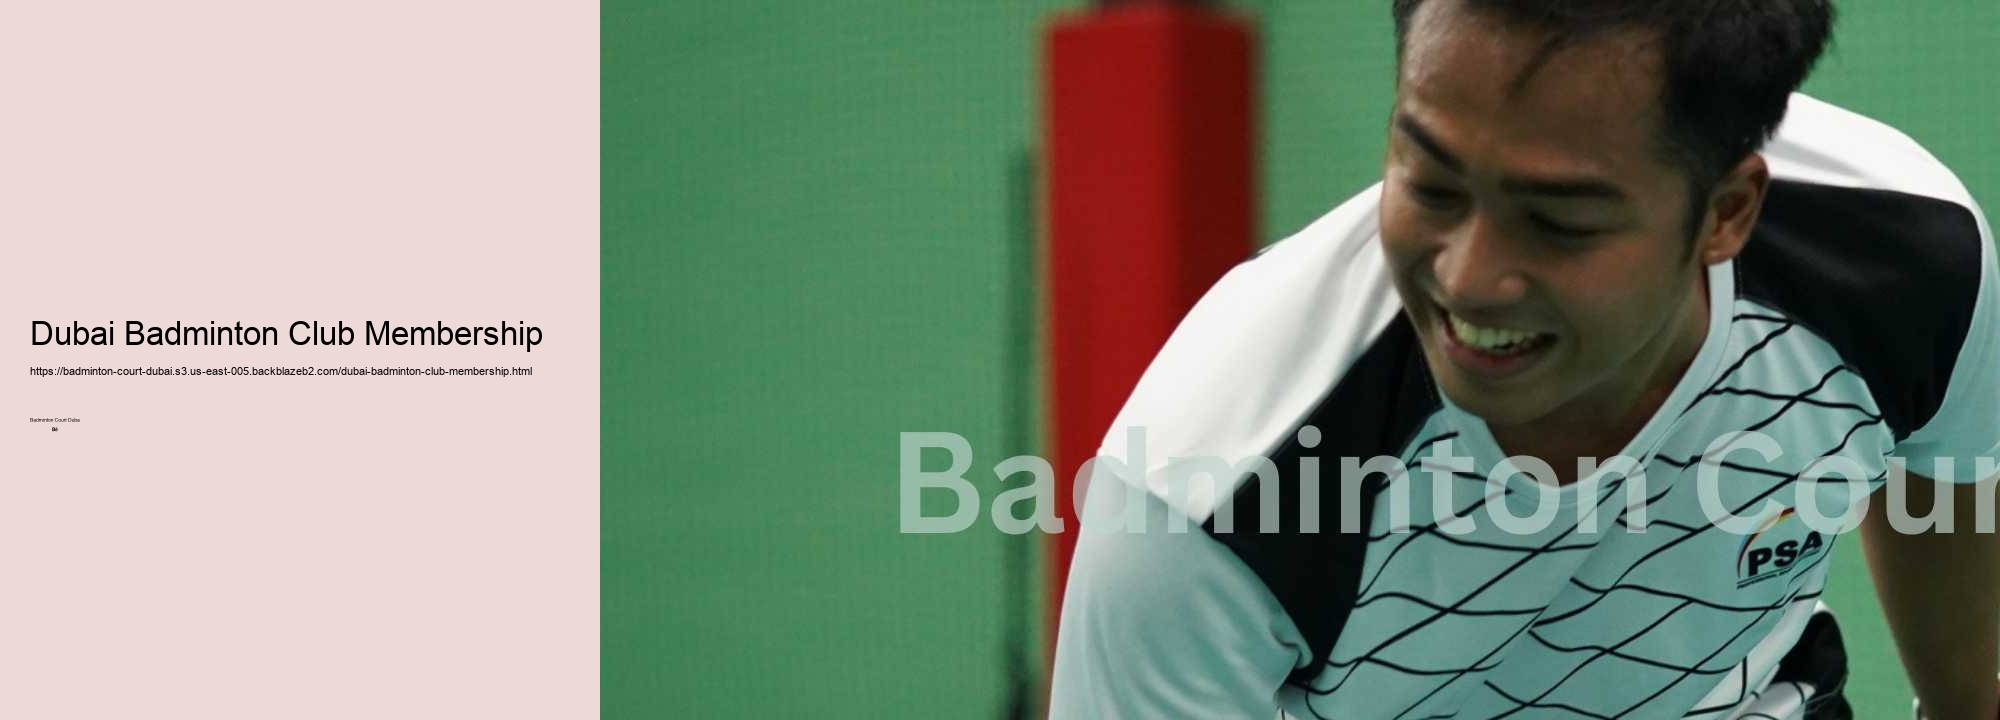 Dubai Badminton Club Membership